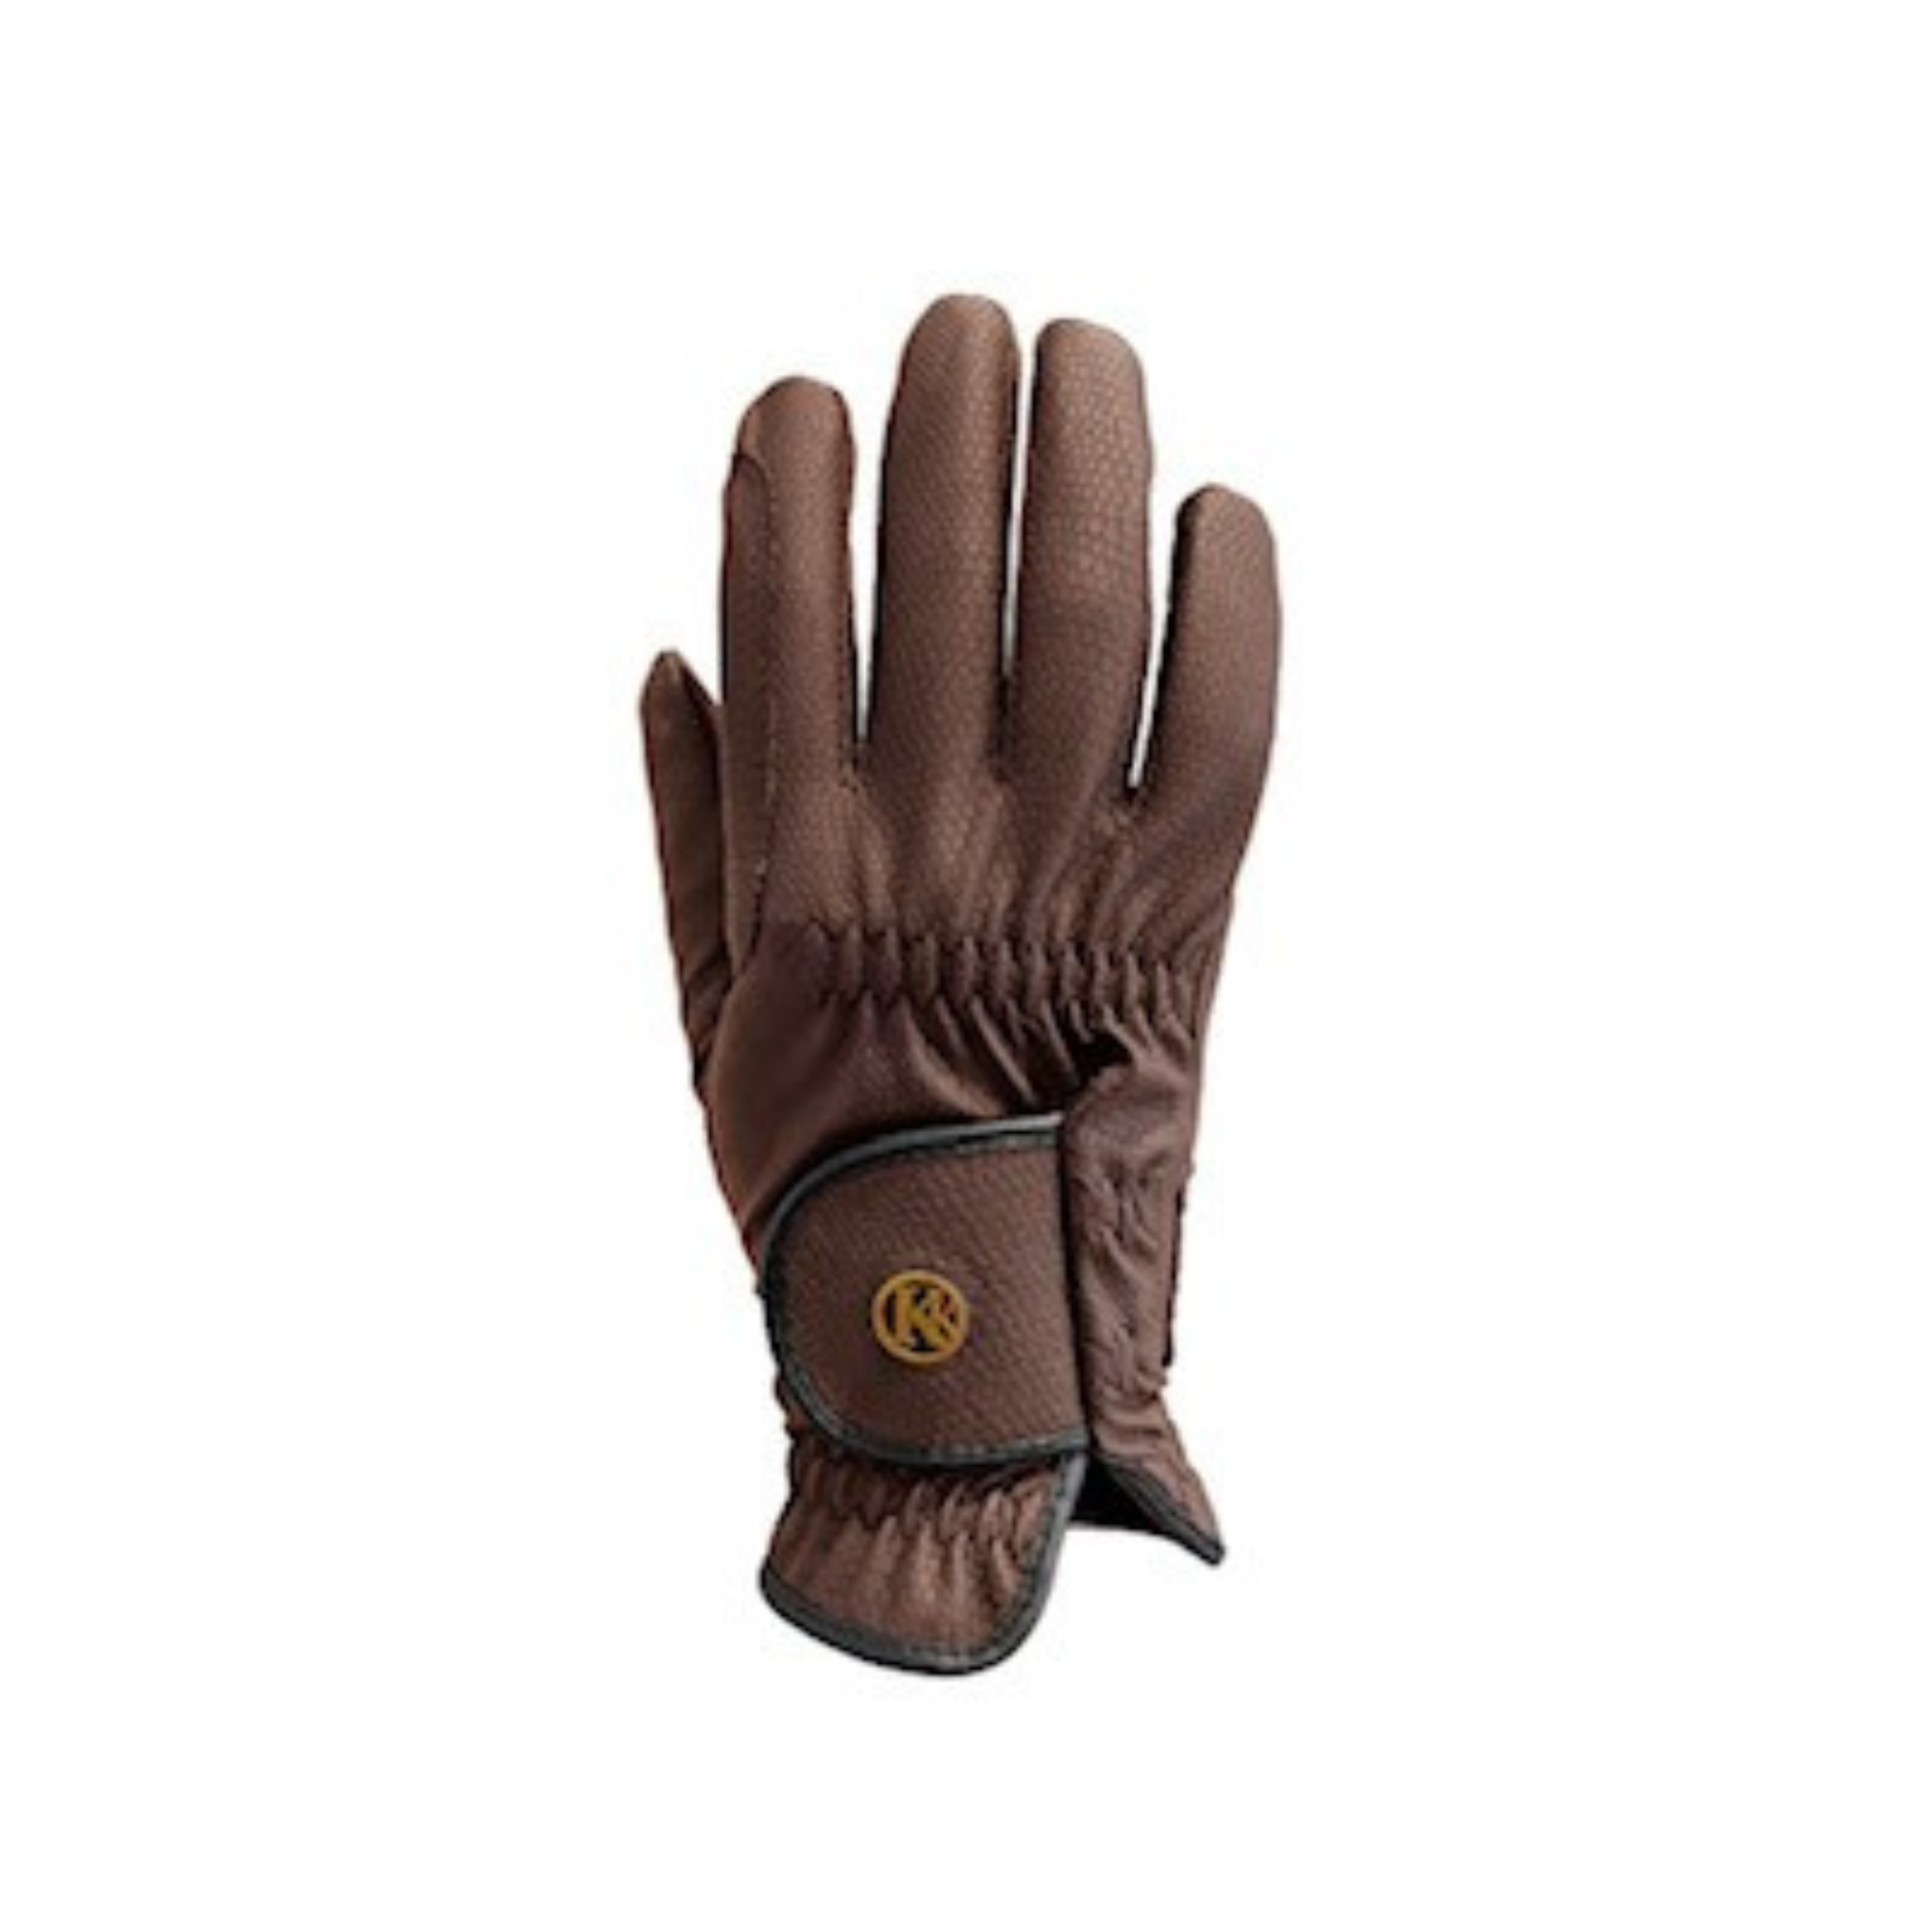 Kunkle Equestrian Premium Show Gloves